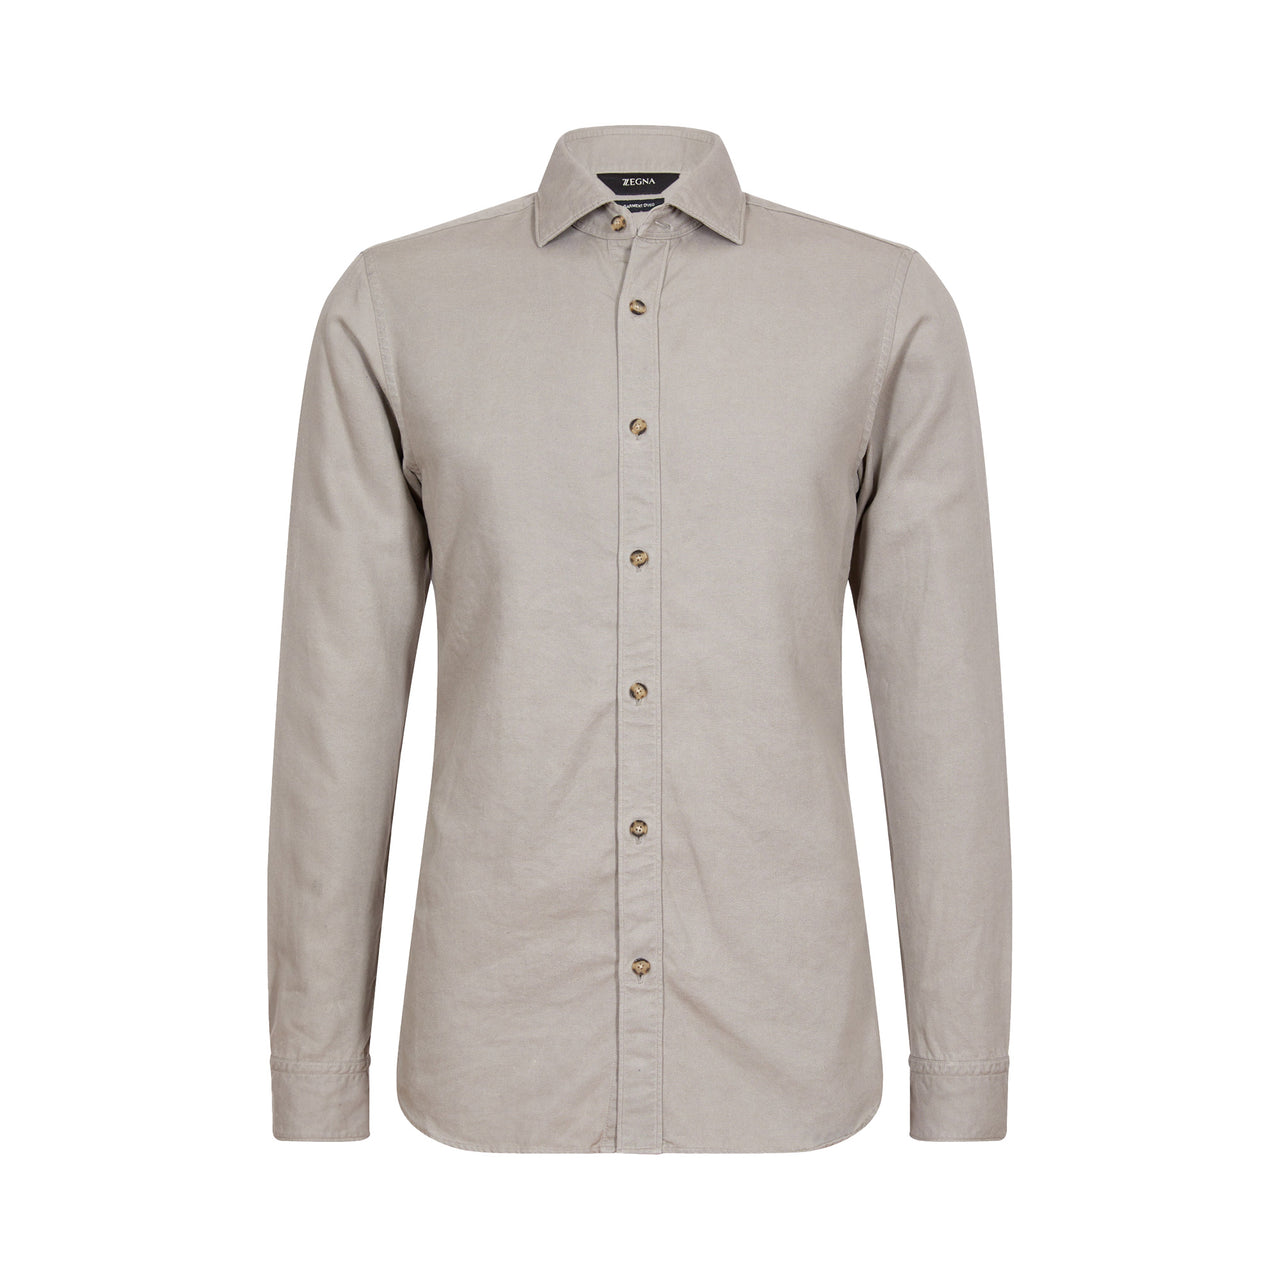 Z ZEGNA Premium Cotton Garment Dyed Shirt TAUPE